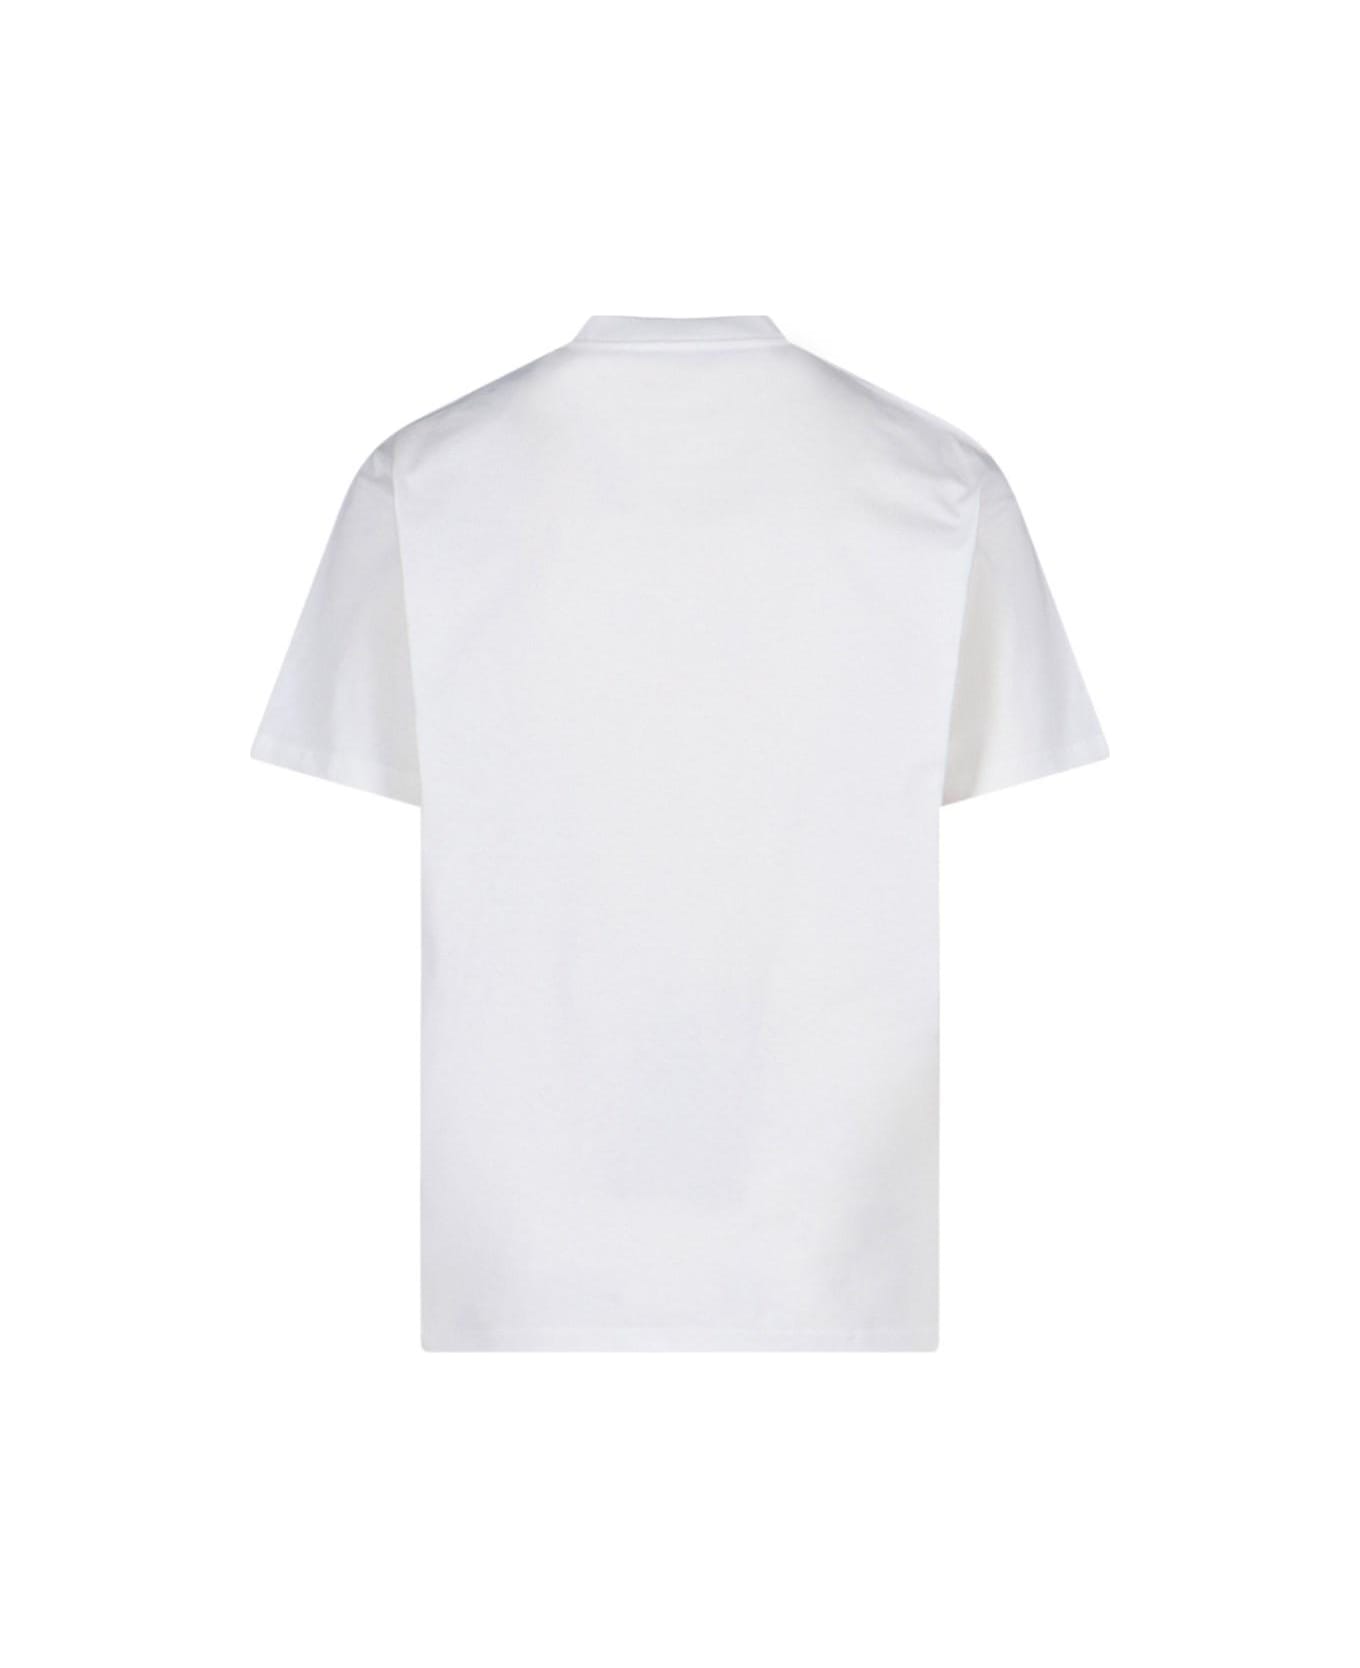 Carhartt 's/s Hocus Pocus' Print T-shirt - Axx White Black